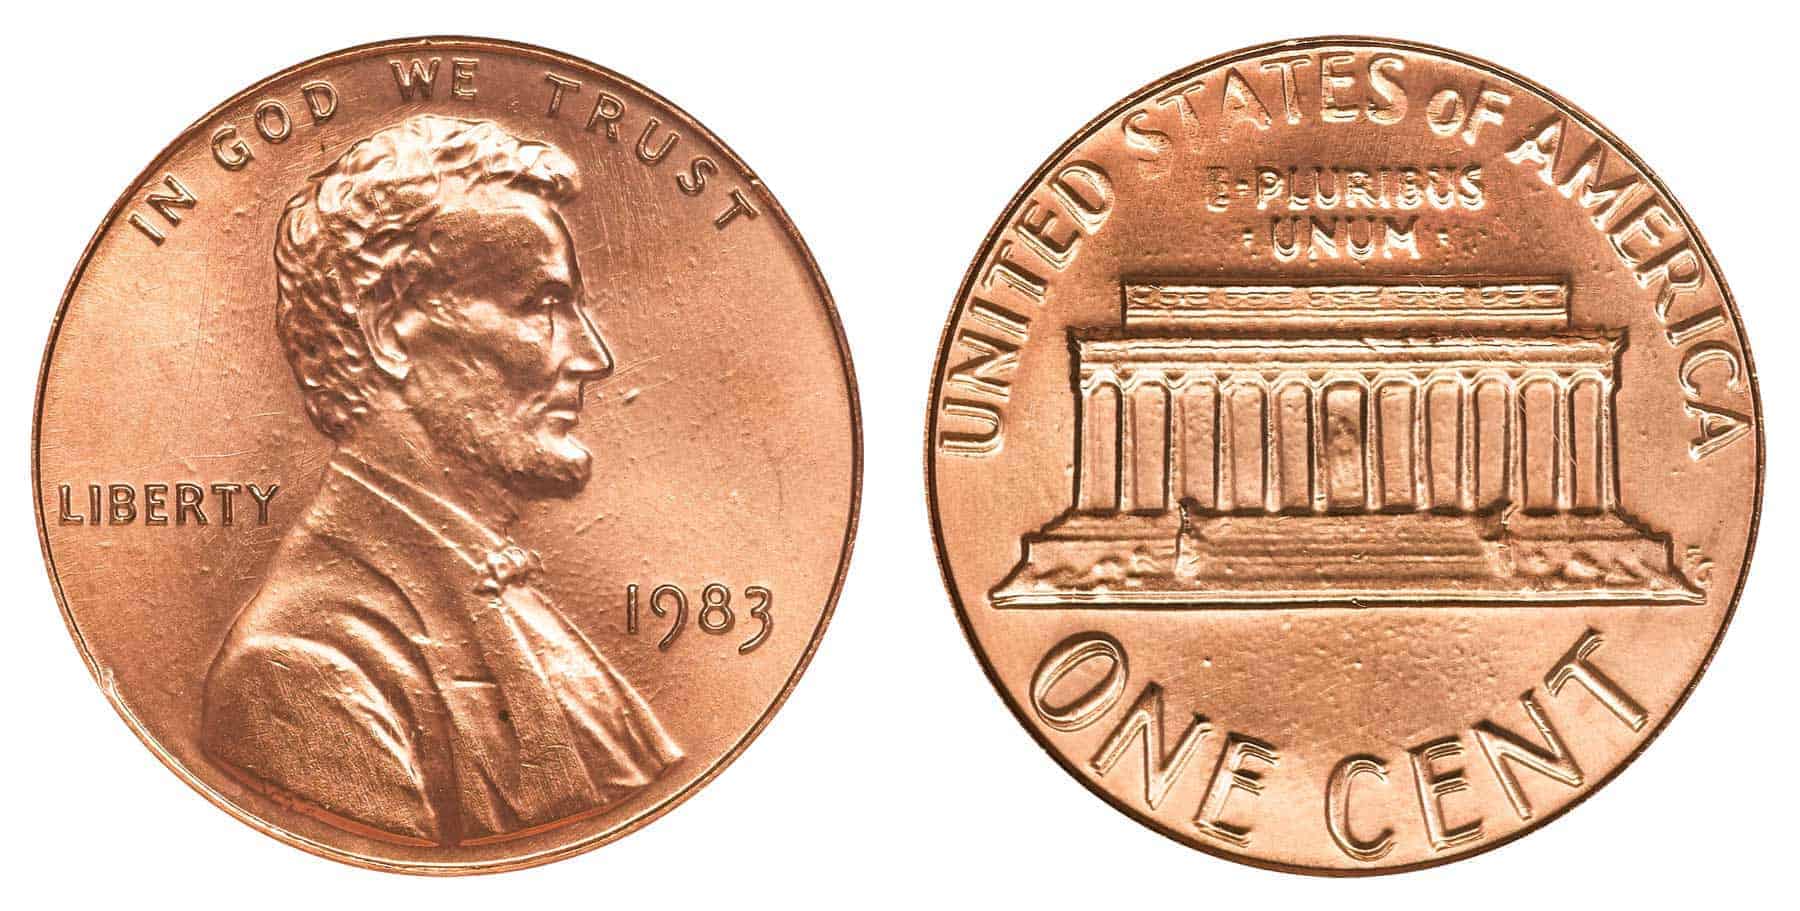 1983 Penny Value Details